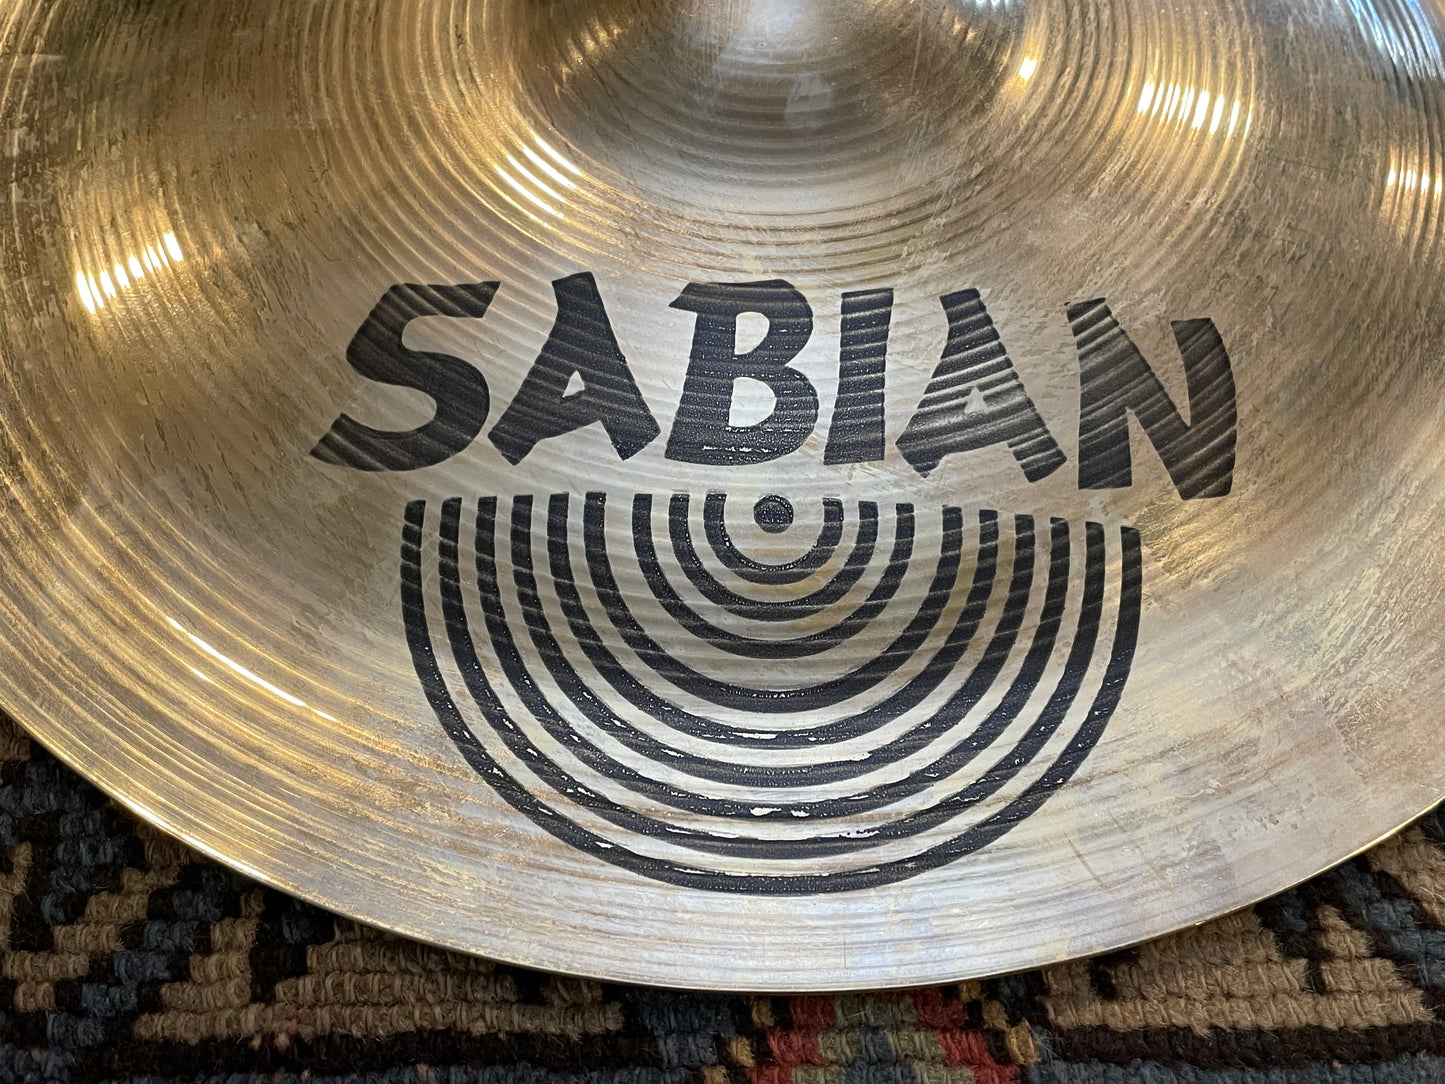 14" Sabian AA Mini Chinese Cymbal 676g